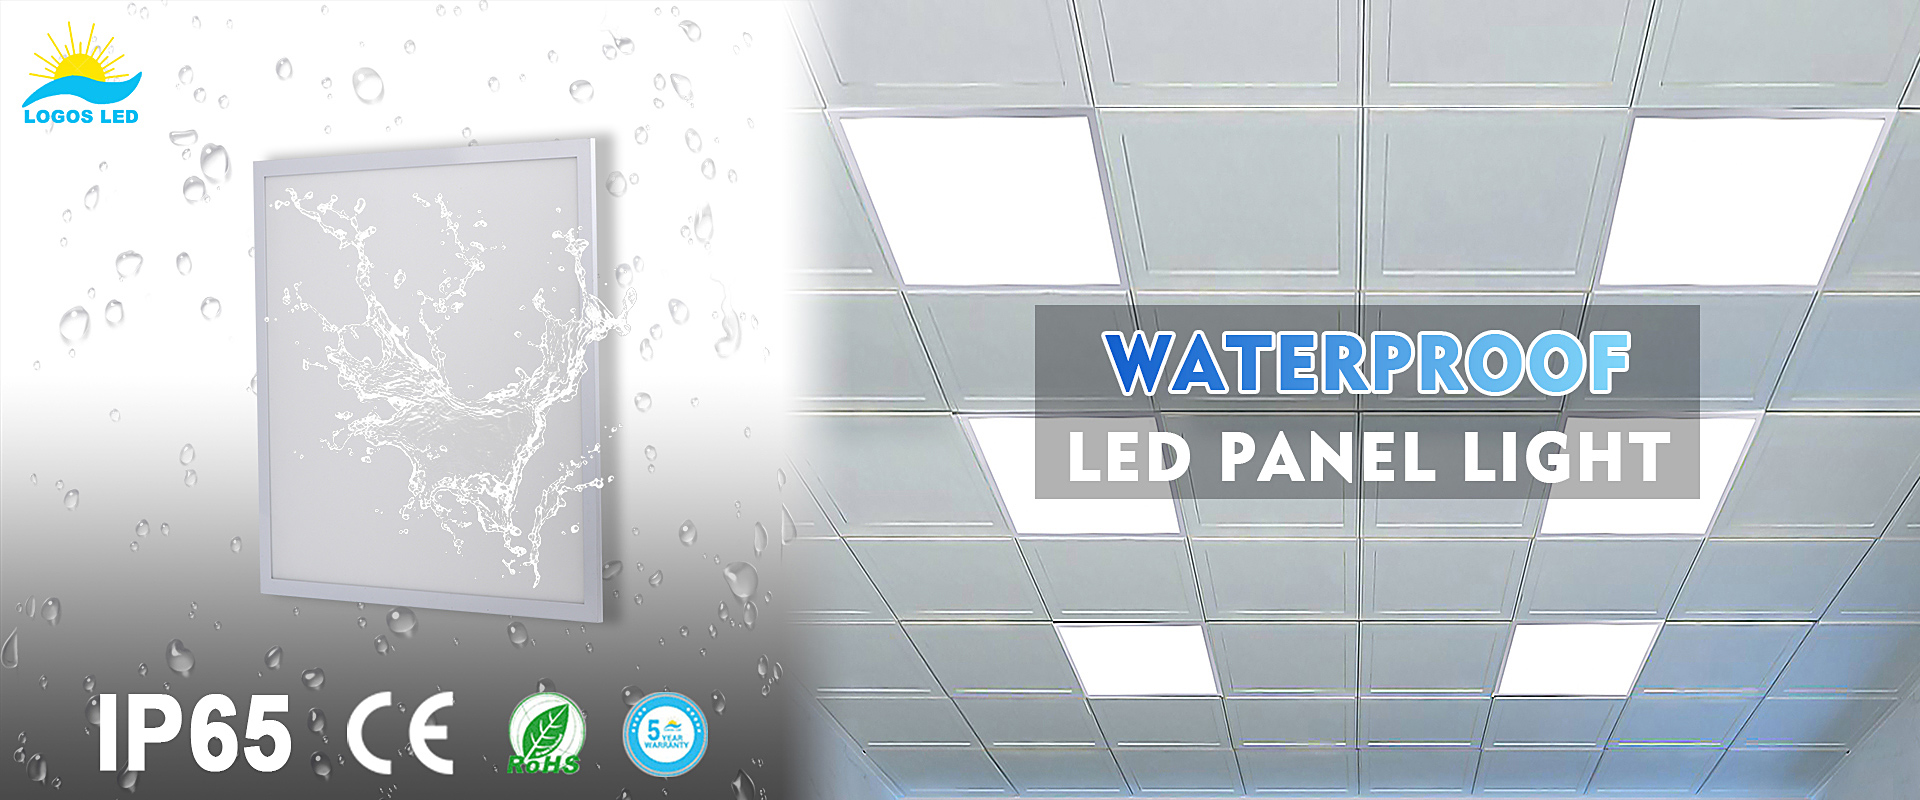 WATERPROOF LED PANEL LIGHT